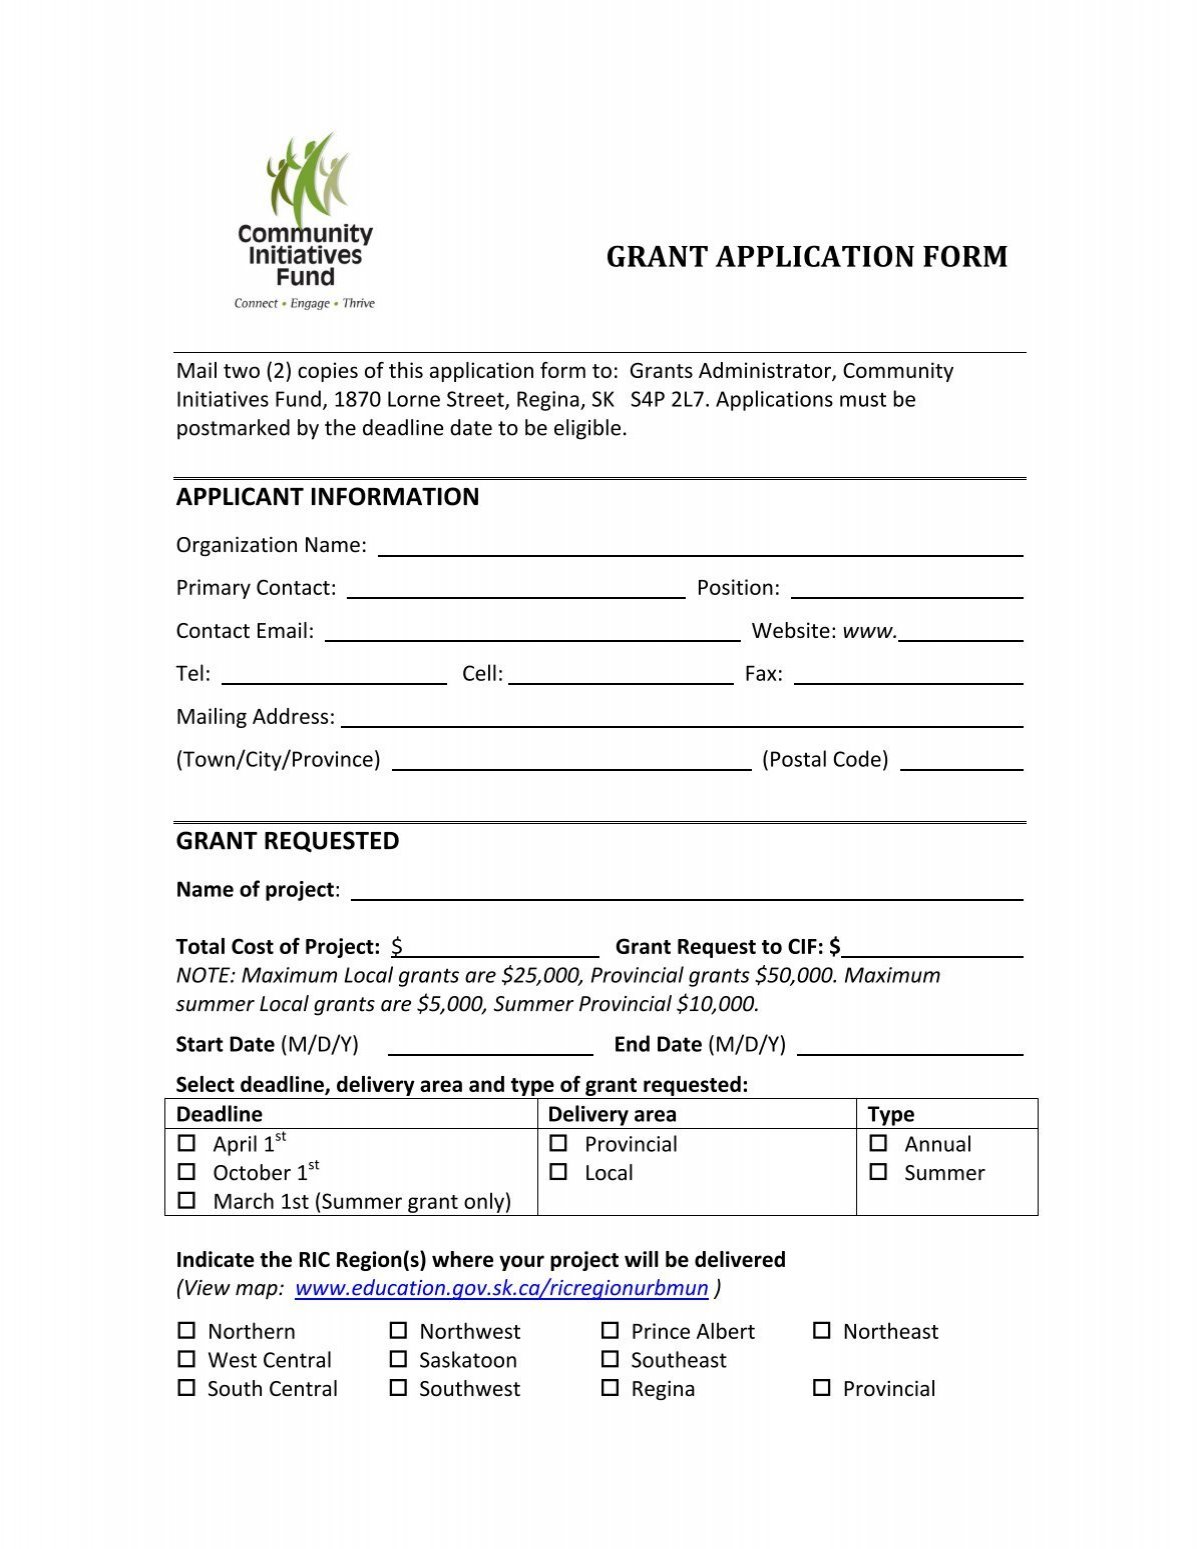 grant-application-form-community-initiatives-fund